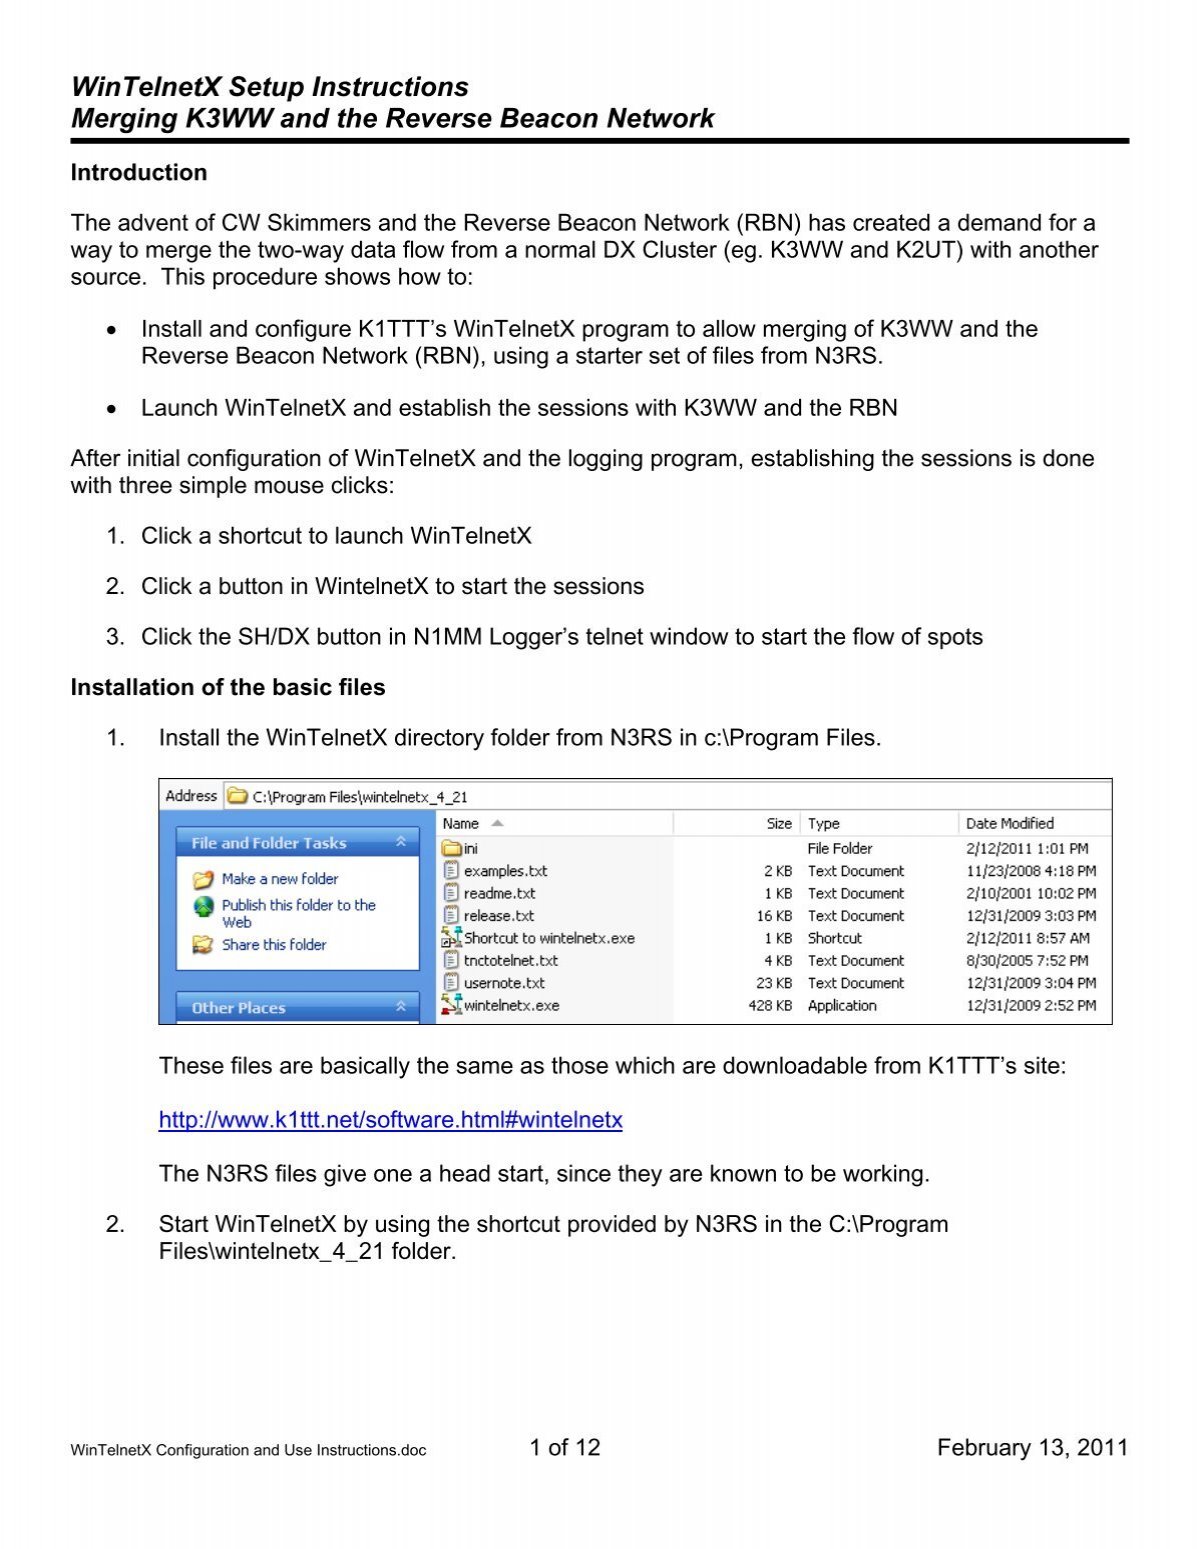 WinTelnetX Configuration and Use Instructions.pdf